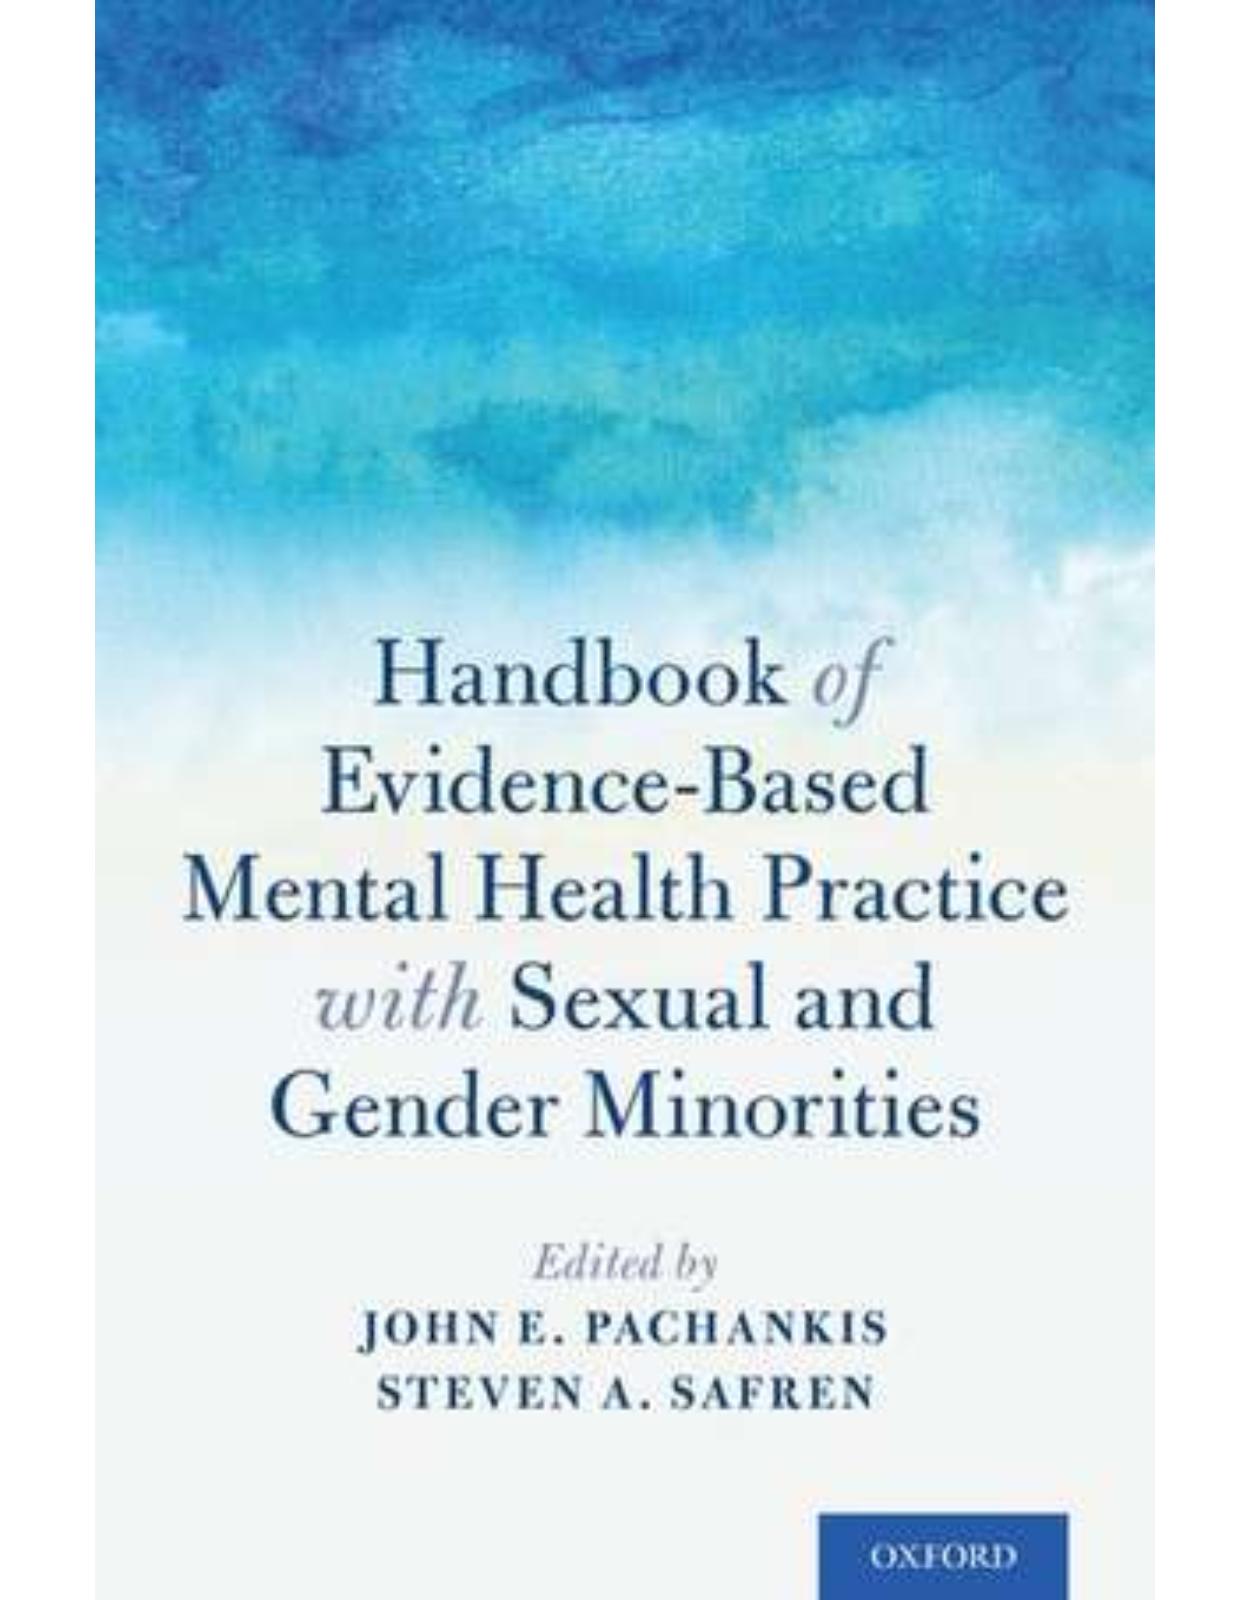 Handbook of Evidence-Based Mental Health Practice with Sexual and Gender Minorities